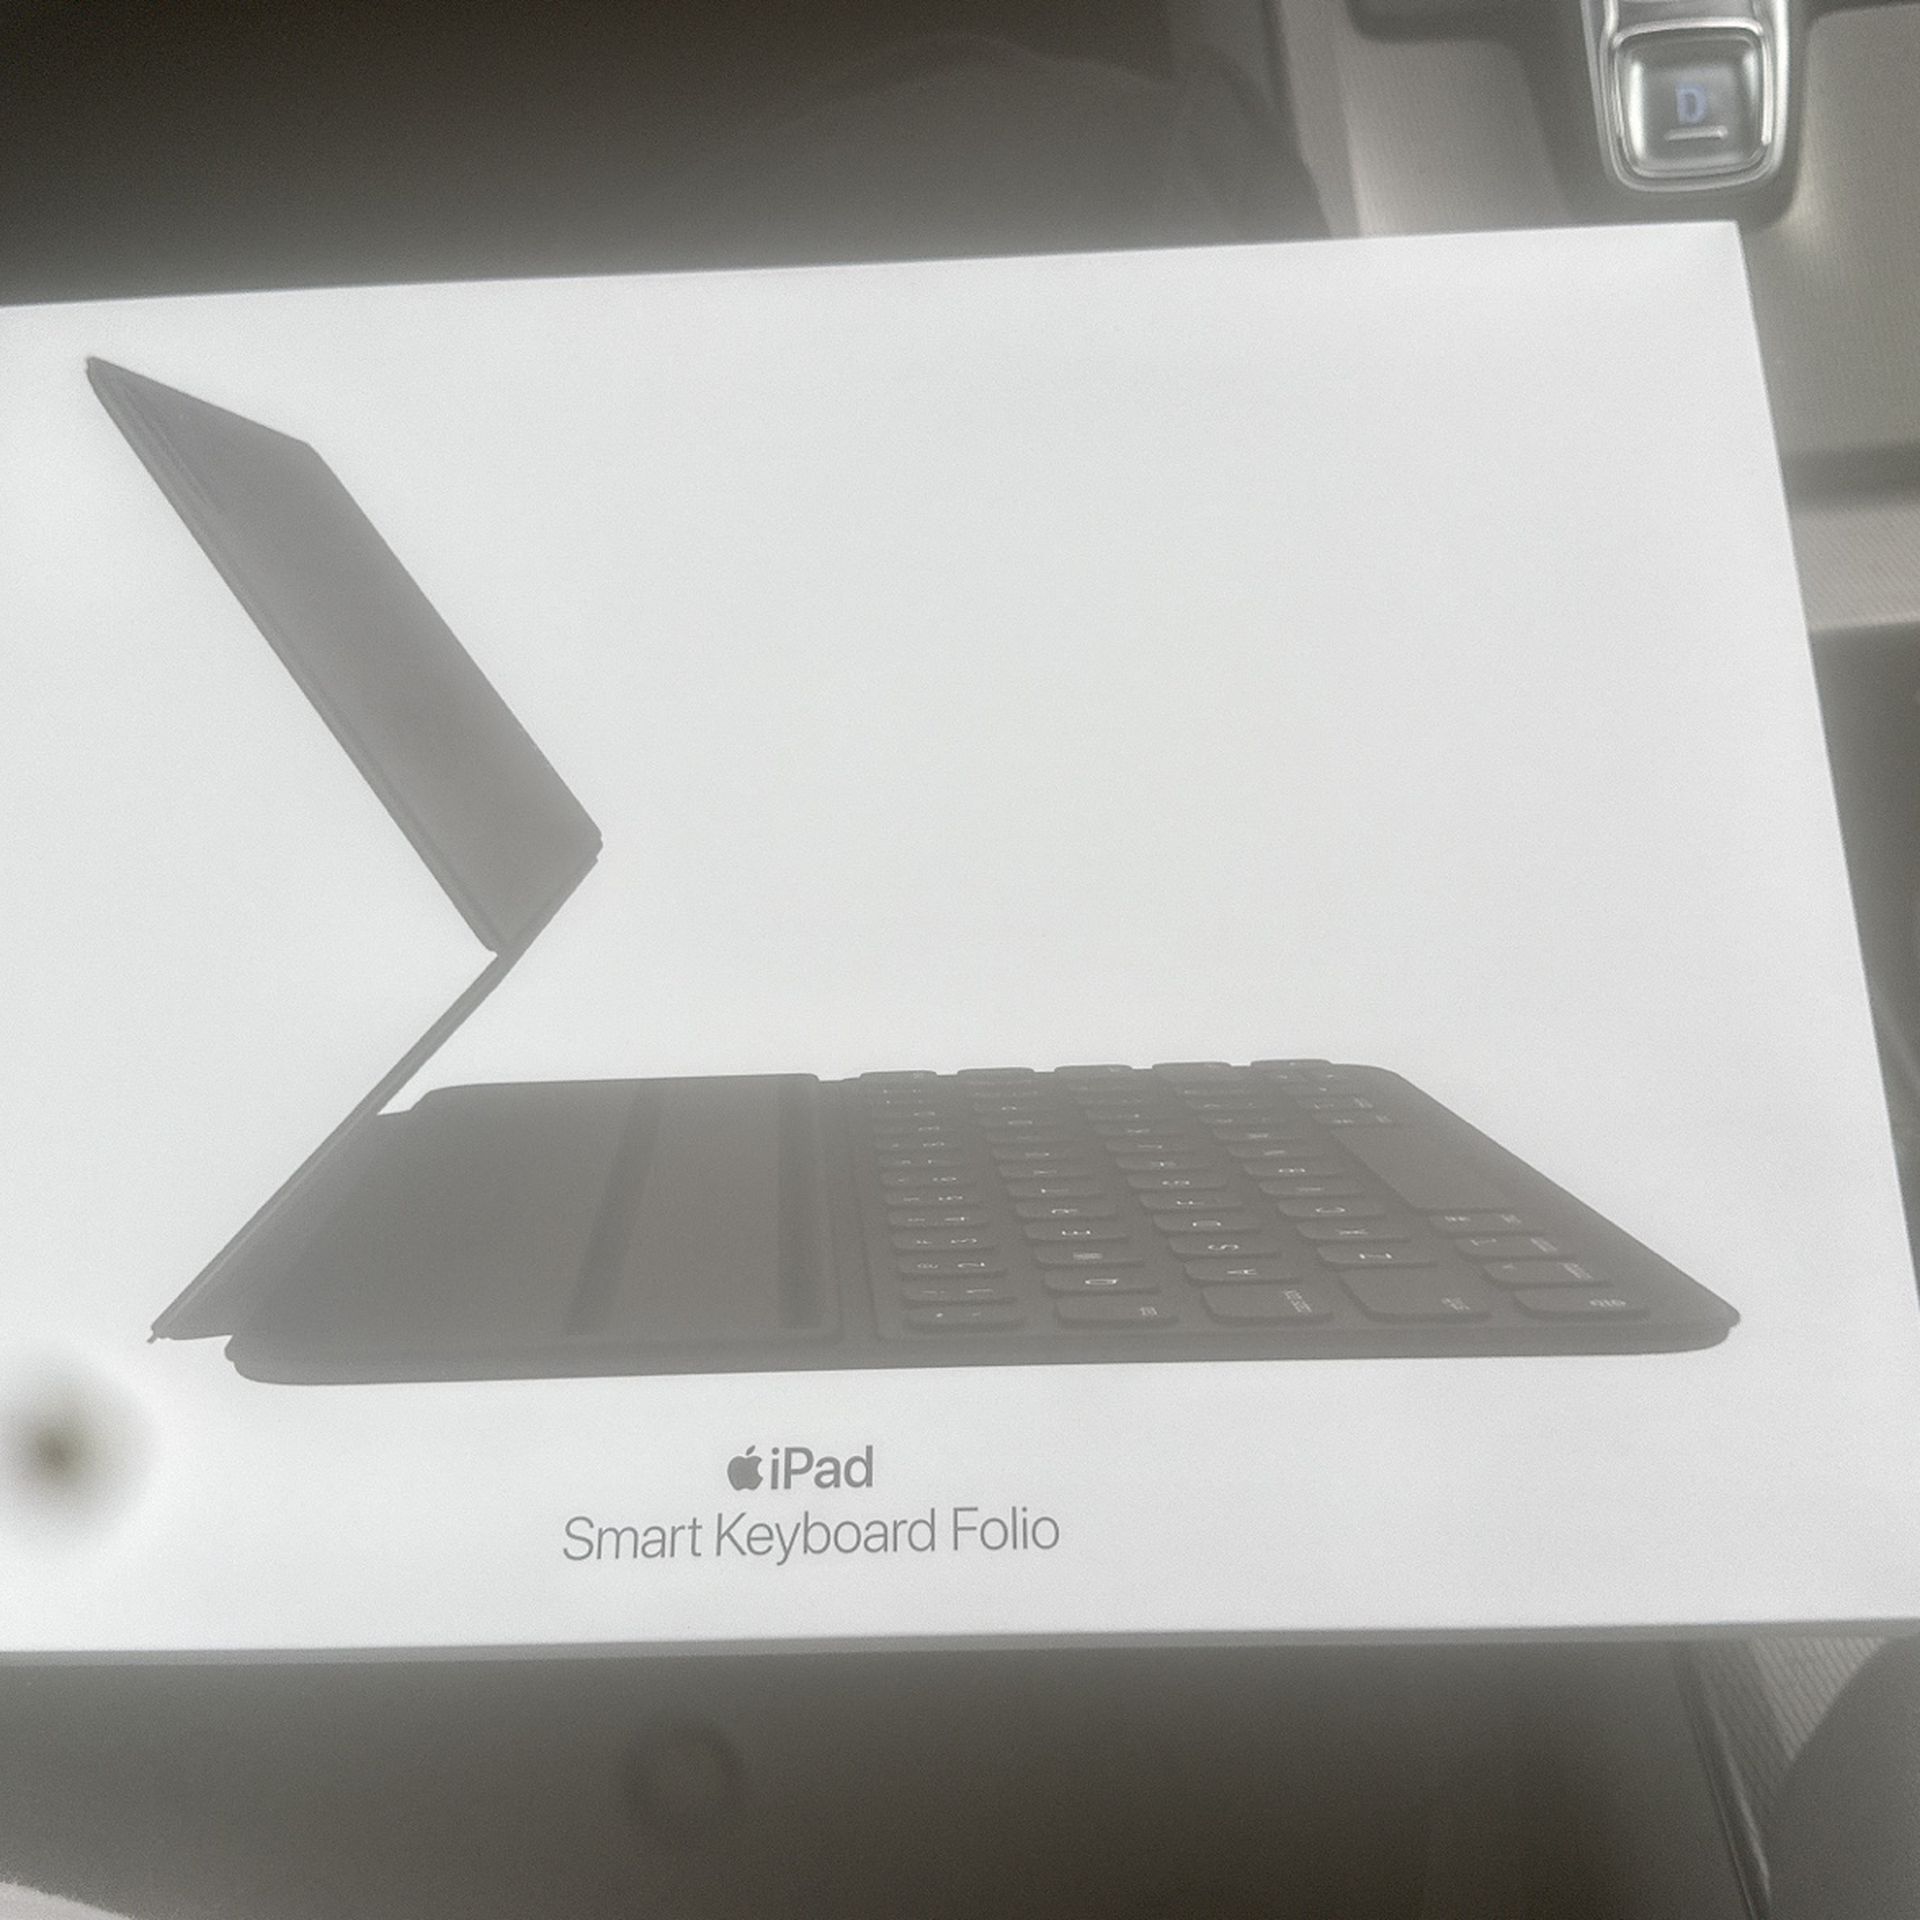 Brand New iPad Smart Keyboard Folio iPad Air 4and5 I Pad Pro 11 Inch 1-4